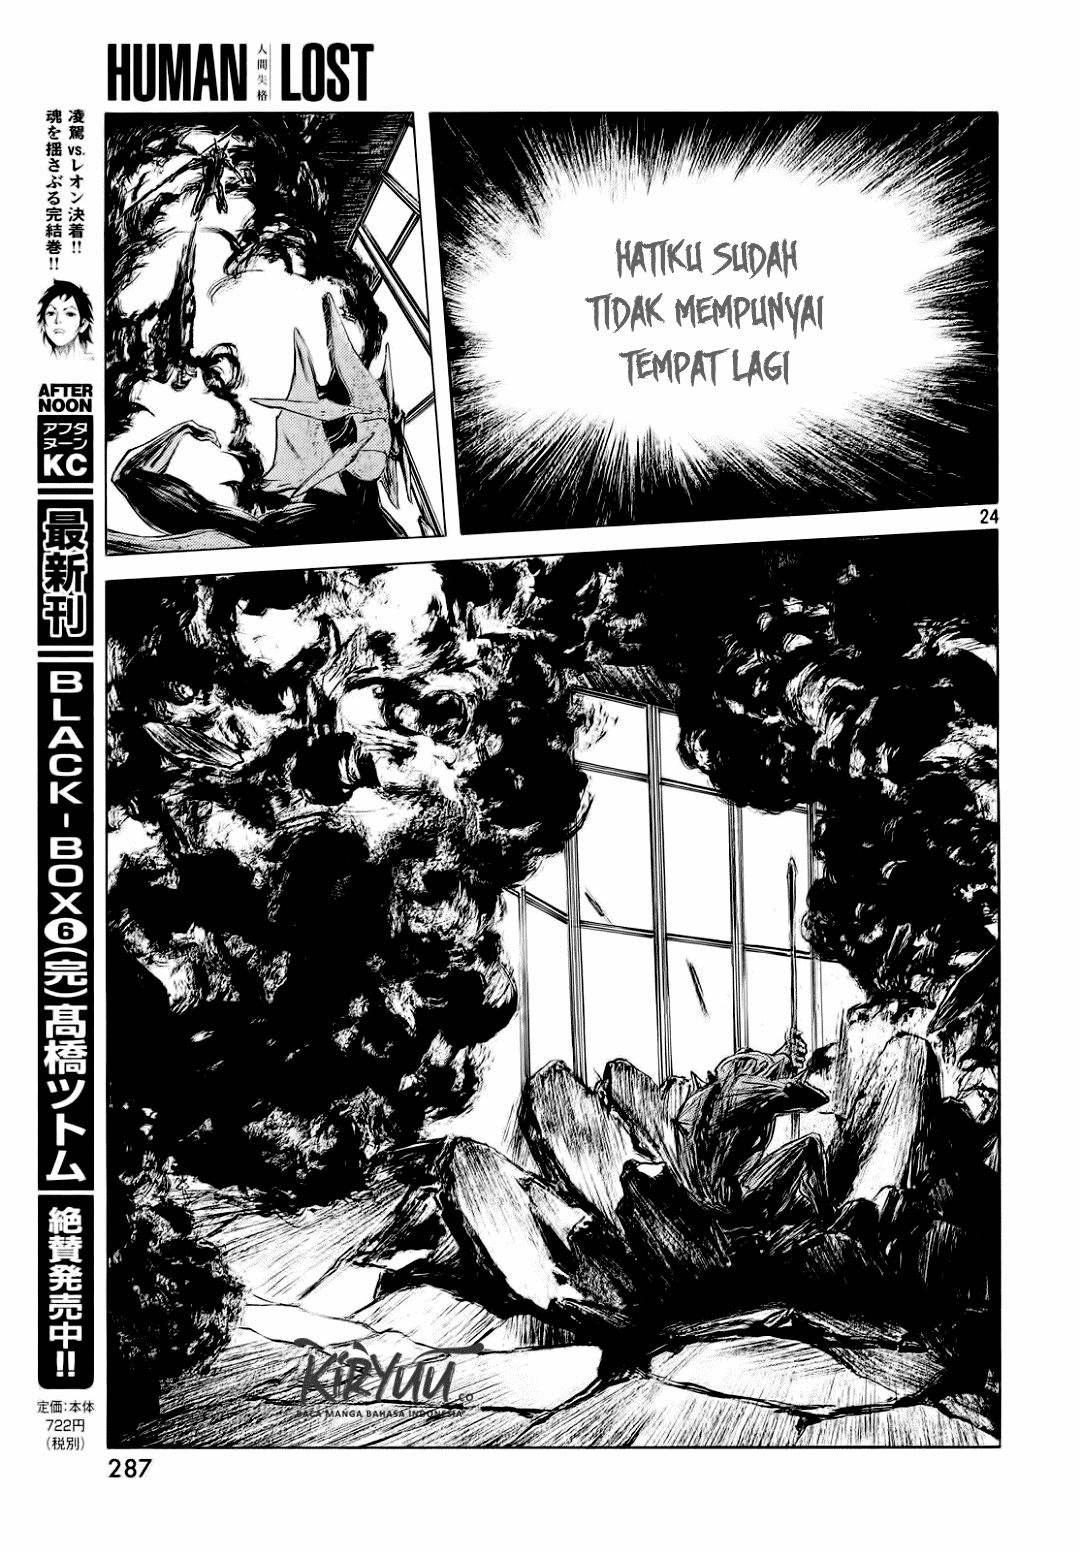 Baca Human Lost: Ningen Shikkaku Chapter 1  - GudangKomik